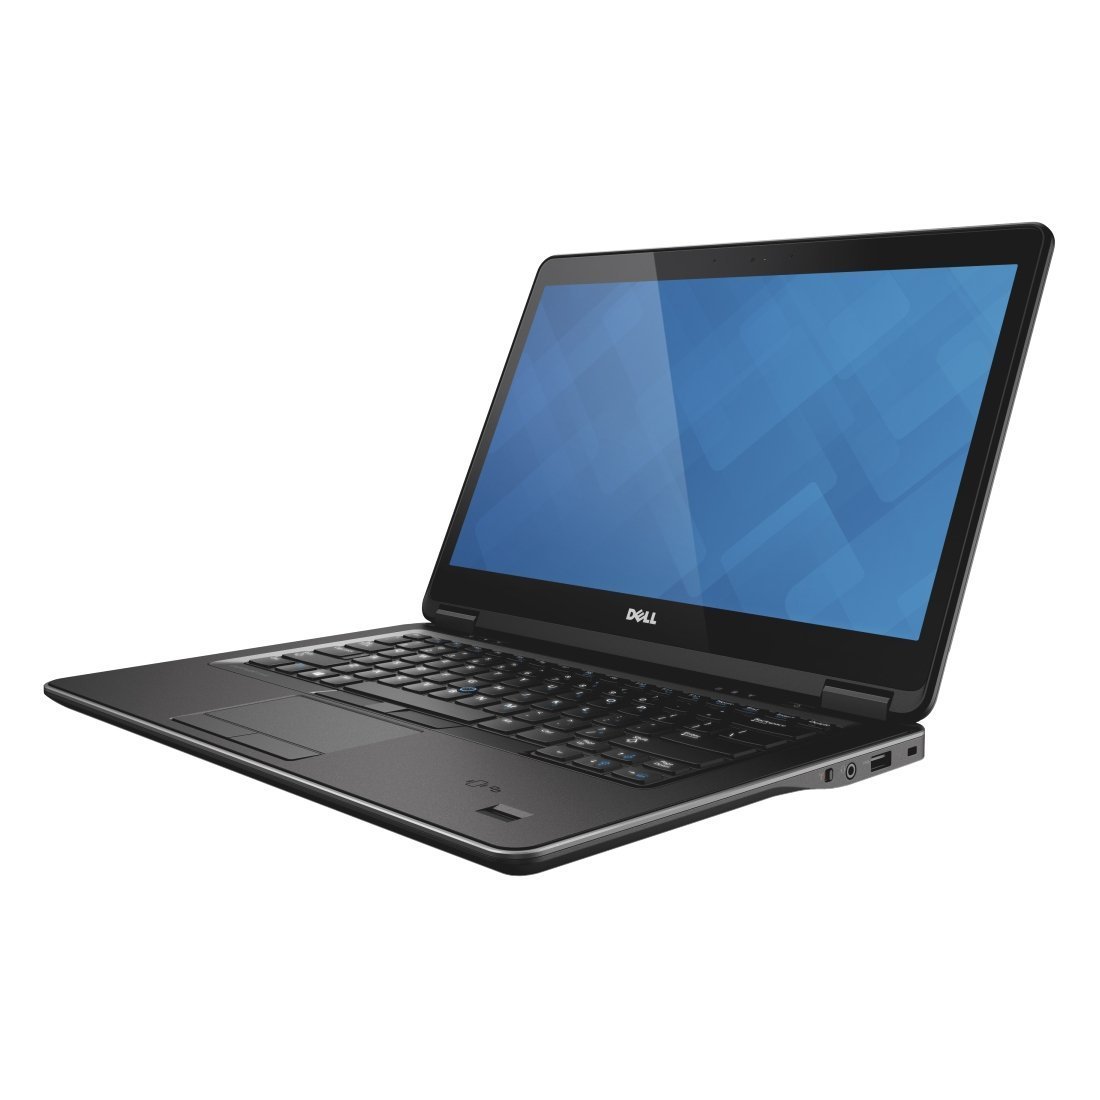 Dell Latitude E7440 14.1? Business Ultrabook PC, Intel Core i5 Processor, 8GB DDR3 RAM, 128GB SSD, Webcam, Windows 10 Professional (Renewed)